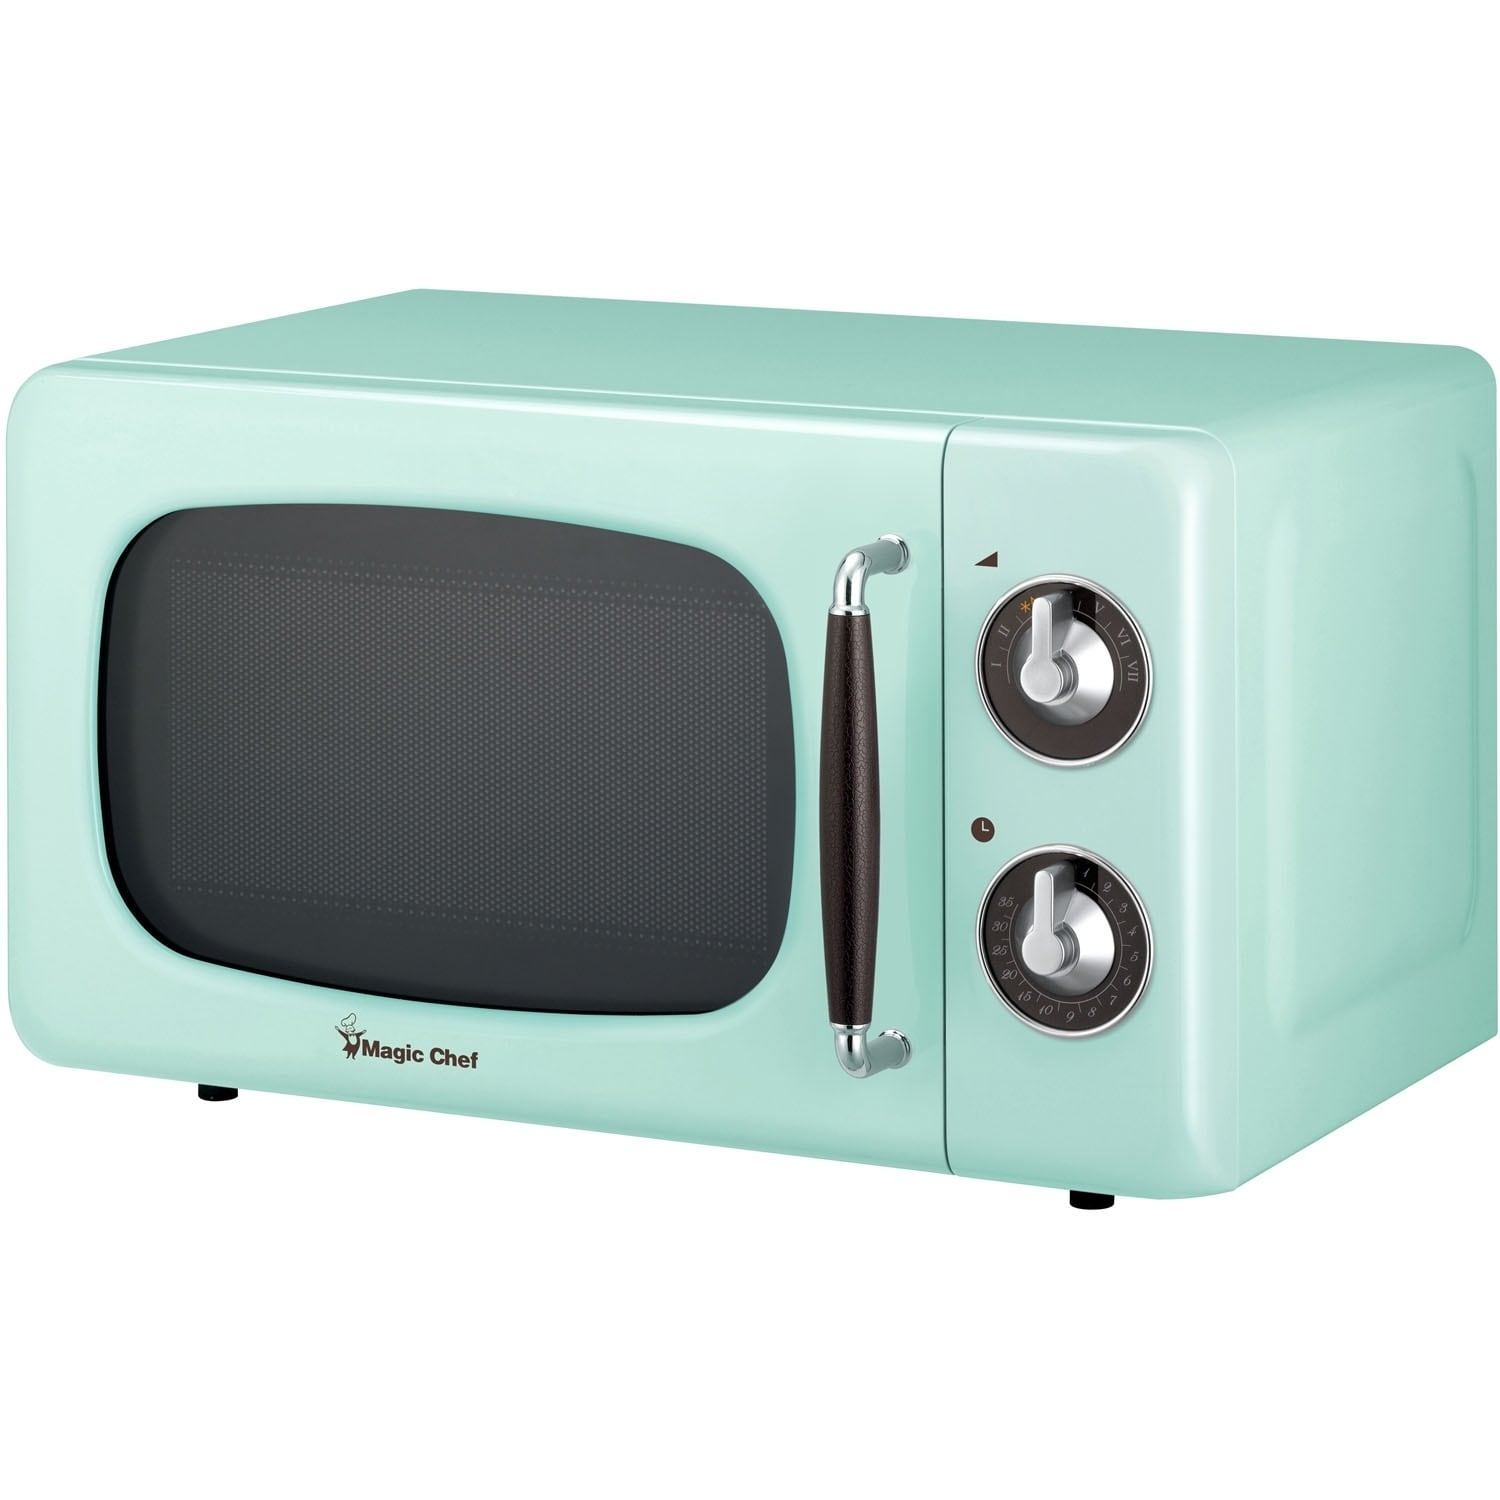 https://ak1.ostkcdn.com/images/products/28764471/Magic-Chef-0.7-Cu.-Ft.-700W-Retro-Countertop-Microwave-Oven-in-Mint-Green-08fe5d1f-9e5a-4647-adc8-0c025da9179b.jpg